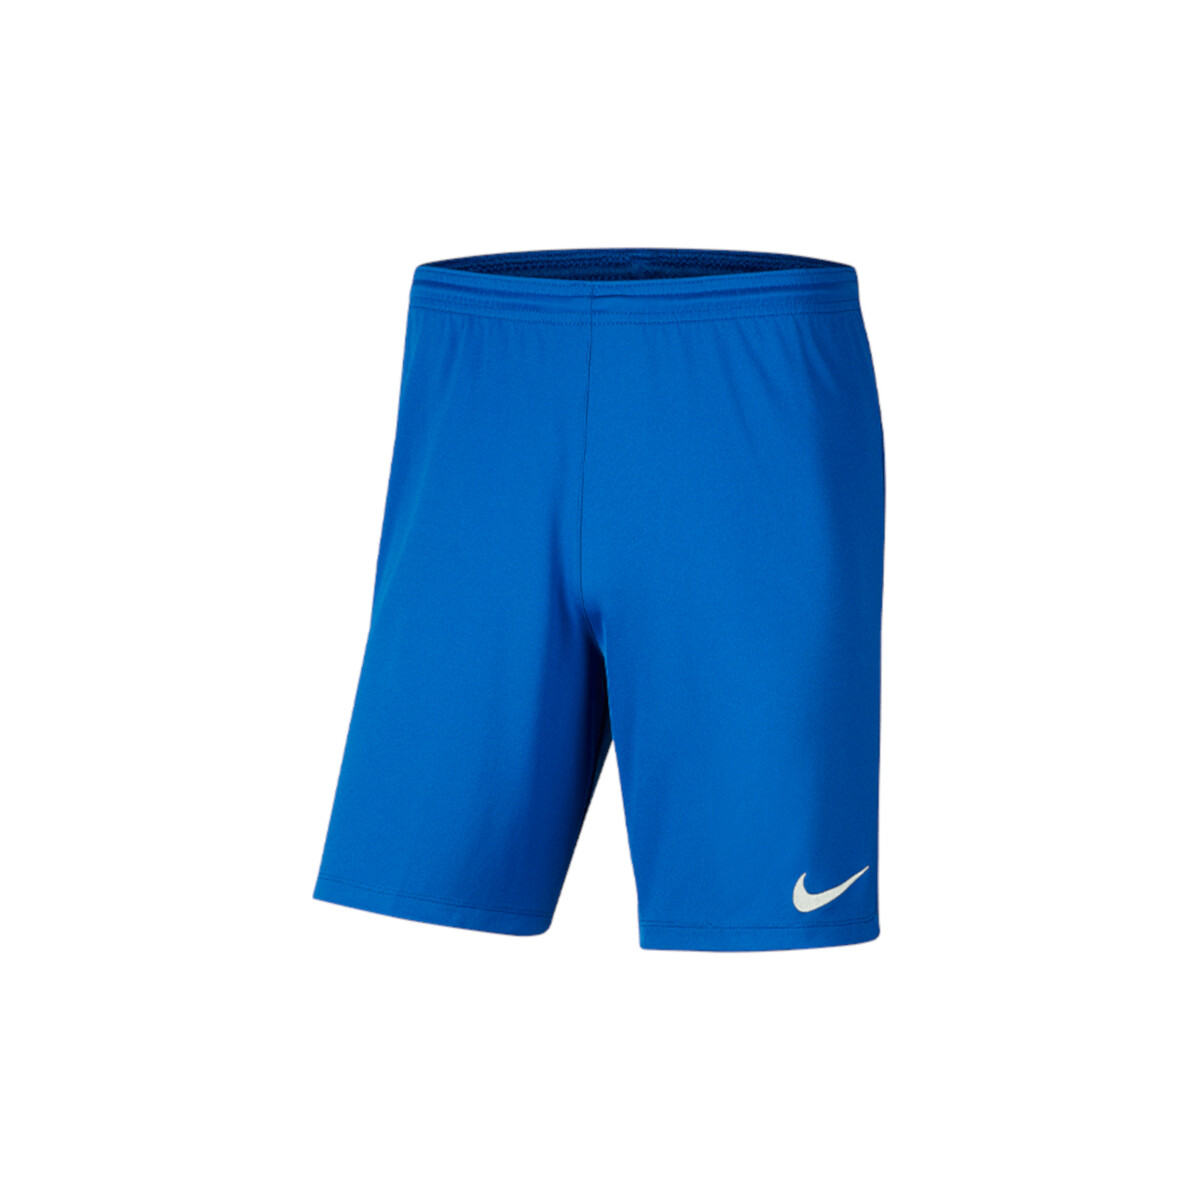 Calcas Nike Park III Shorts 19938245 1200 A